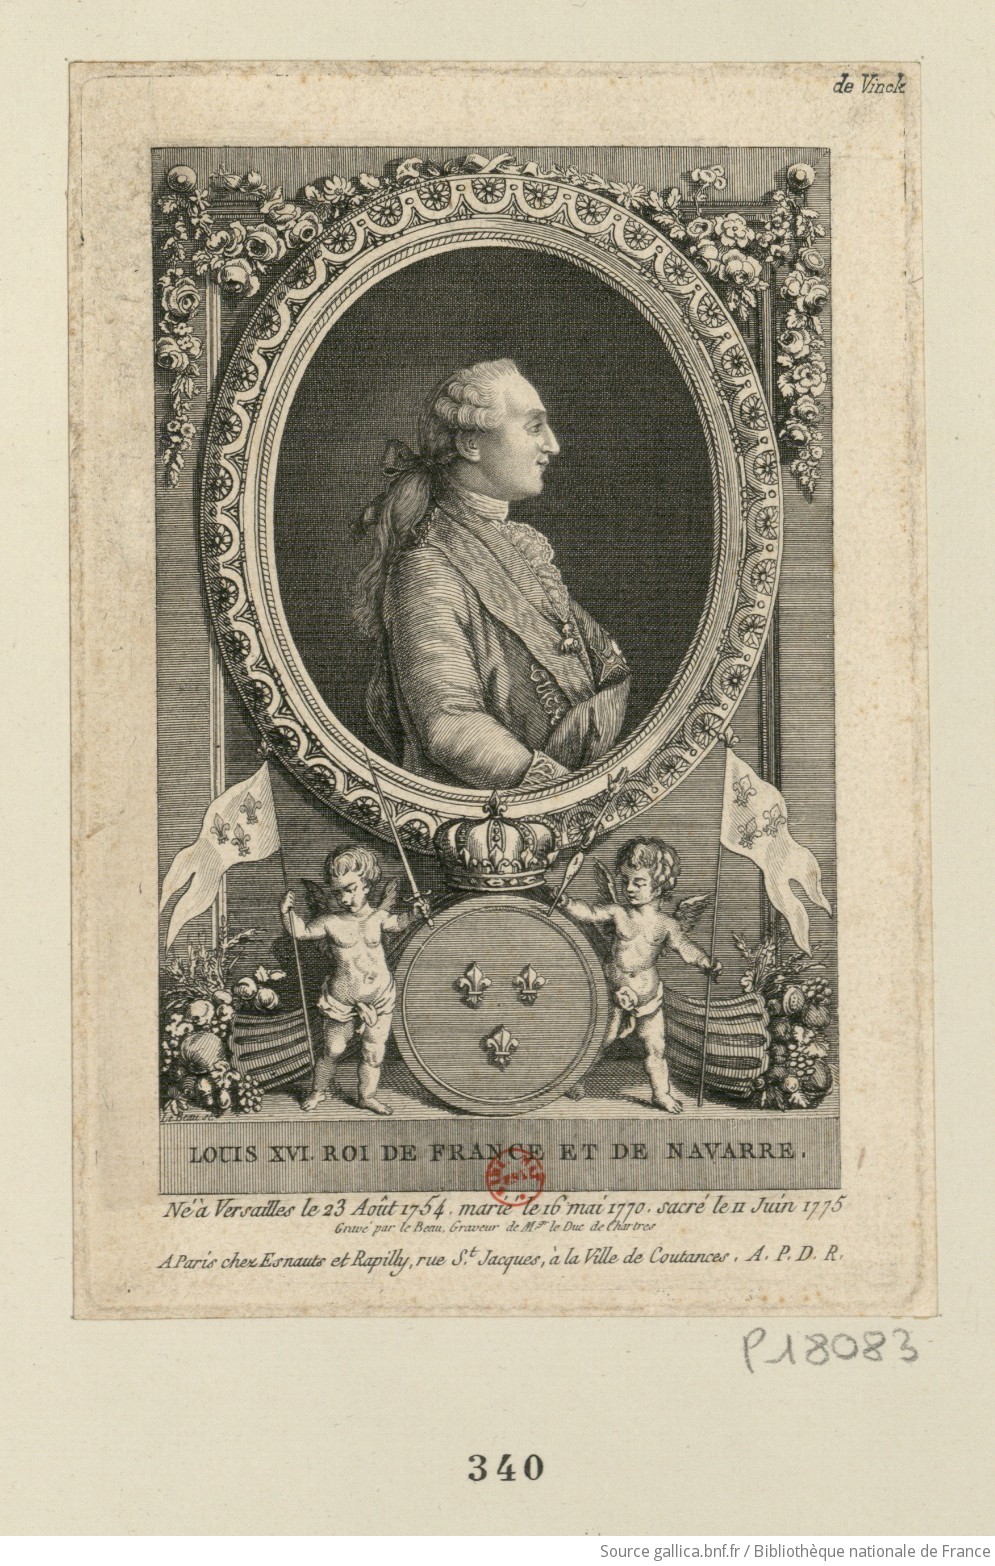 Stunning Image of Louis XVI in 1775 